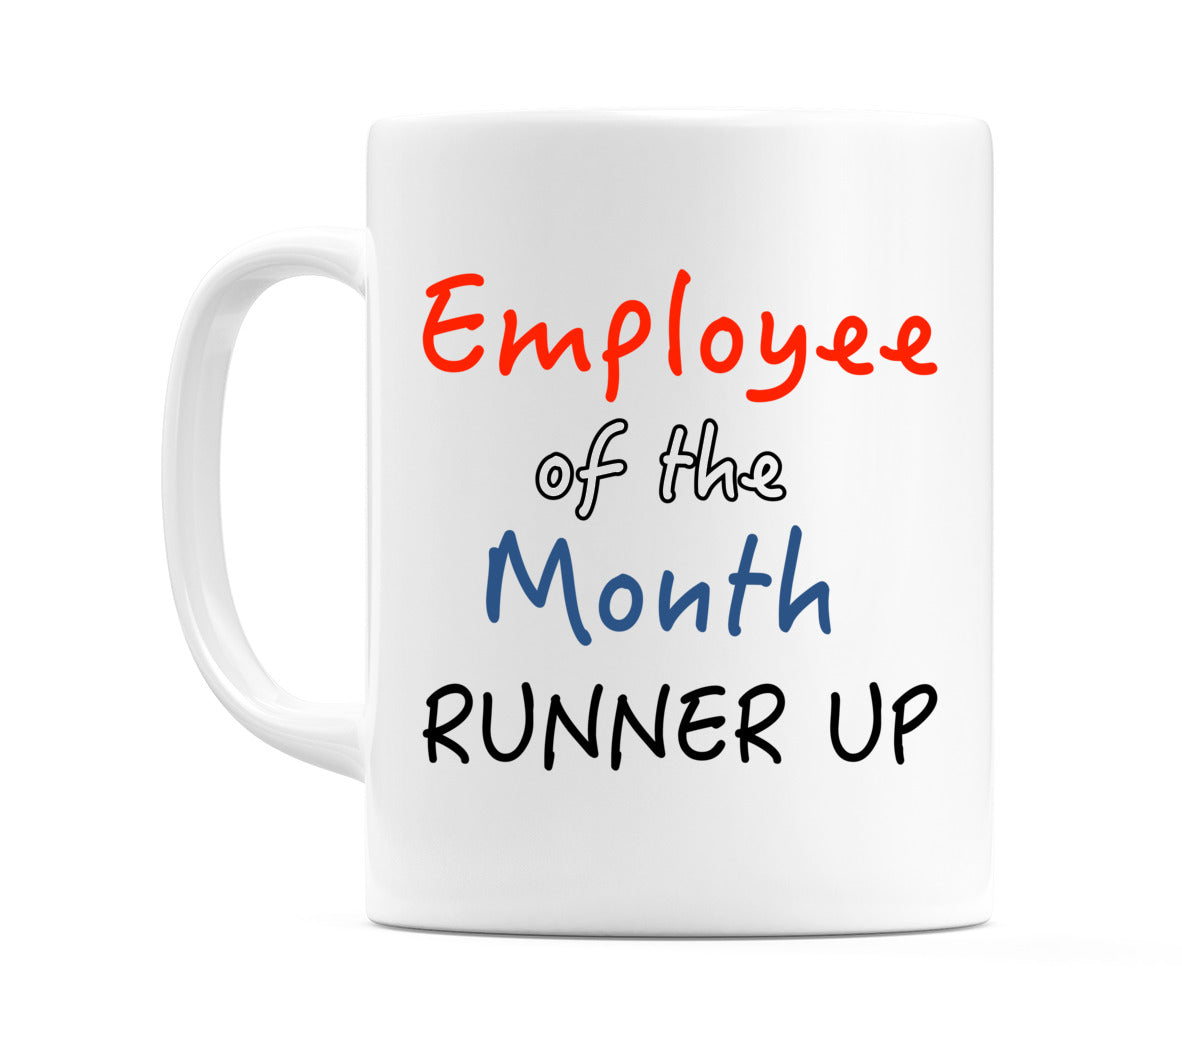 Employee of the Month RUNNER UP Mug